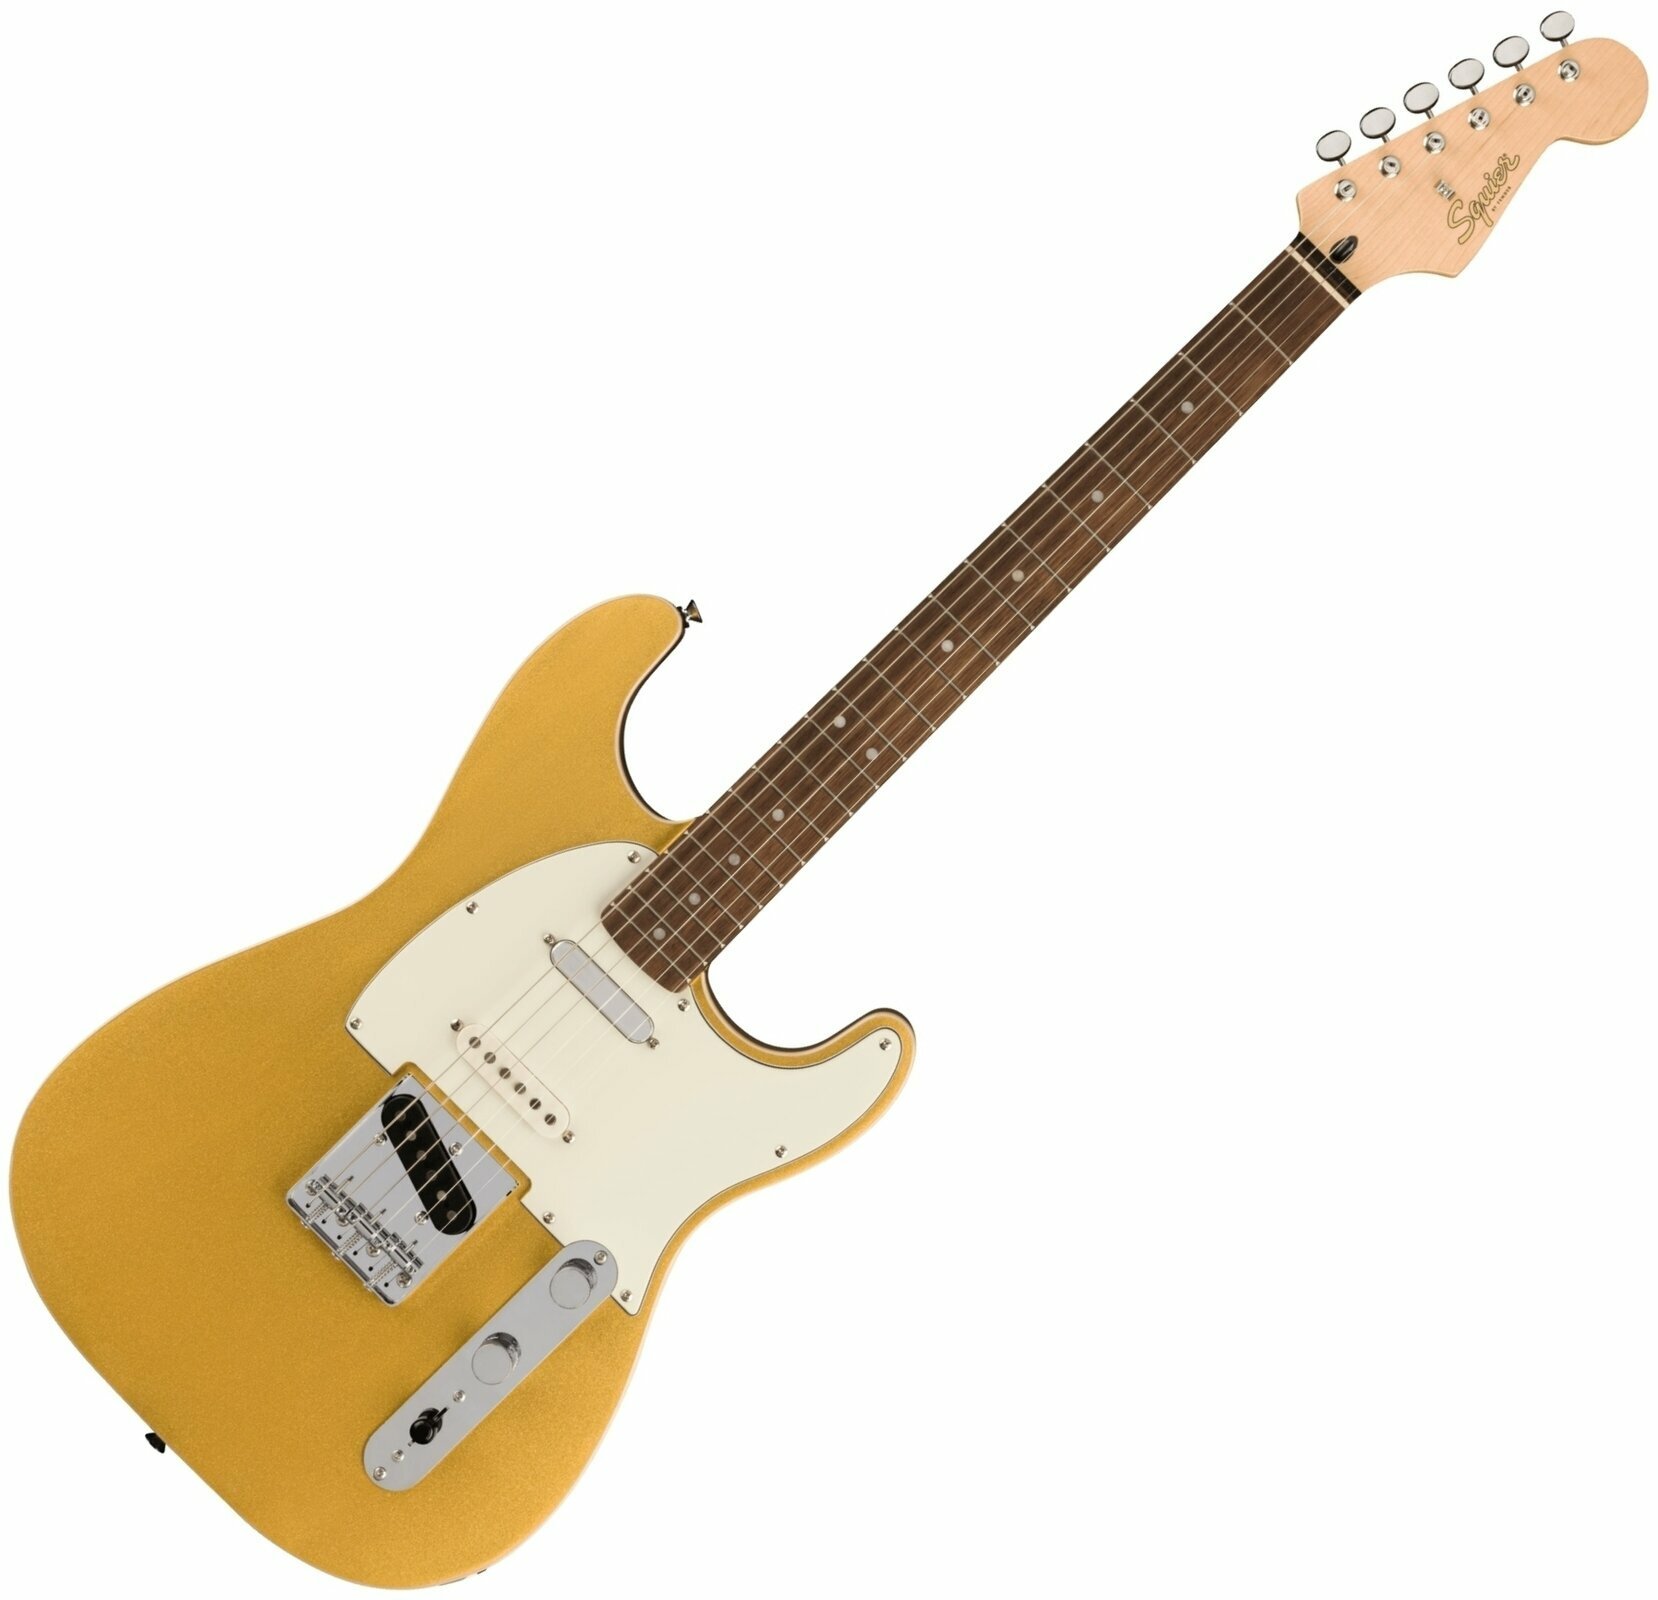 Electric guitar Fender Squier Paranormal Custom Nashville Stratocaster Aztec Gold (Just unboxed)